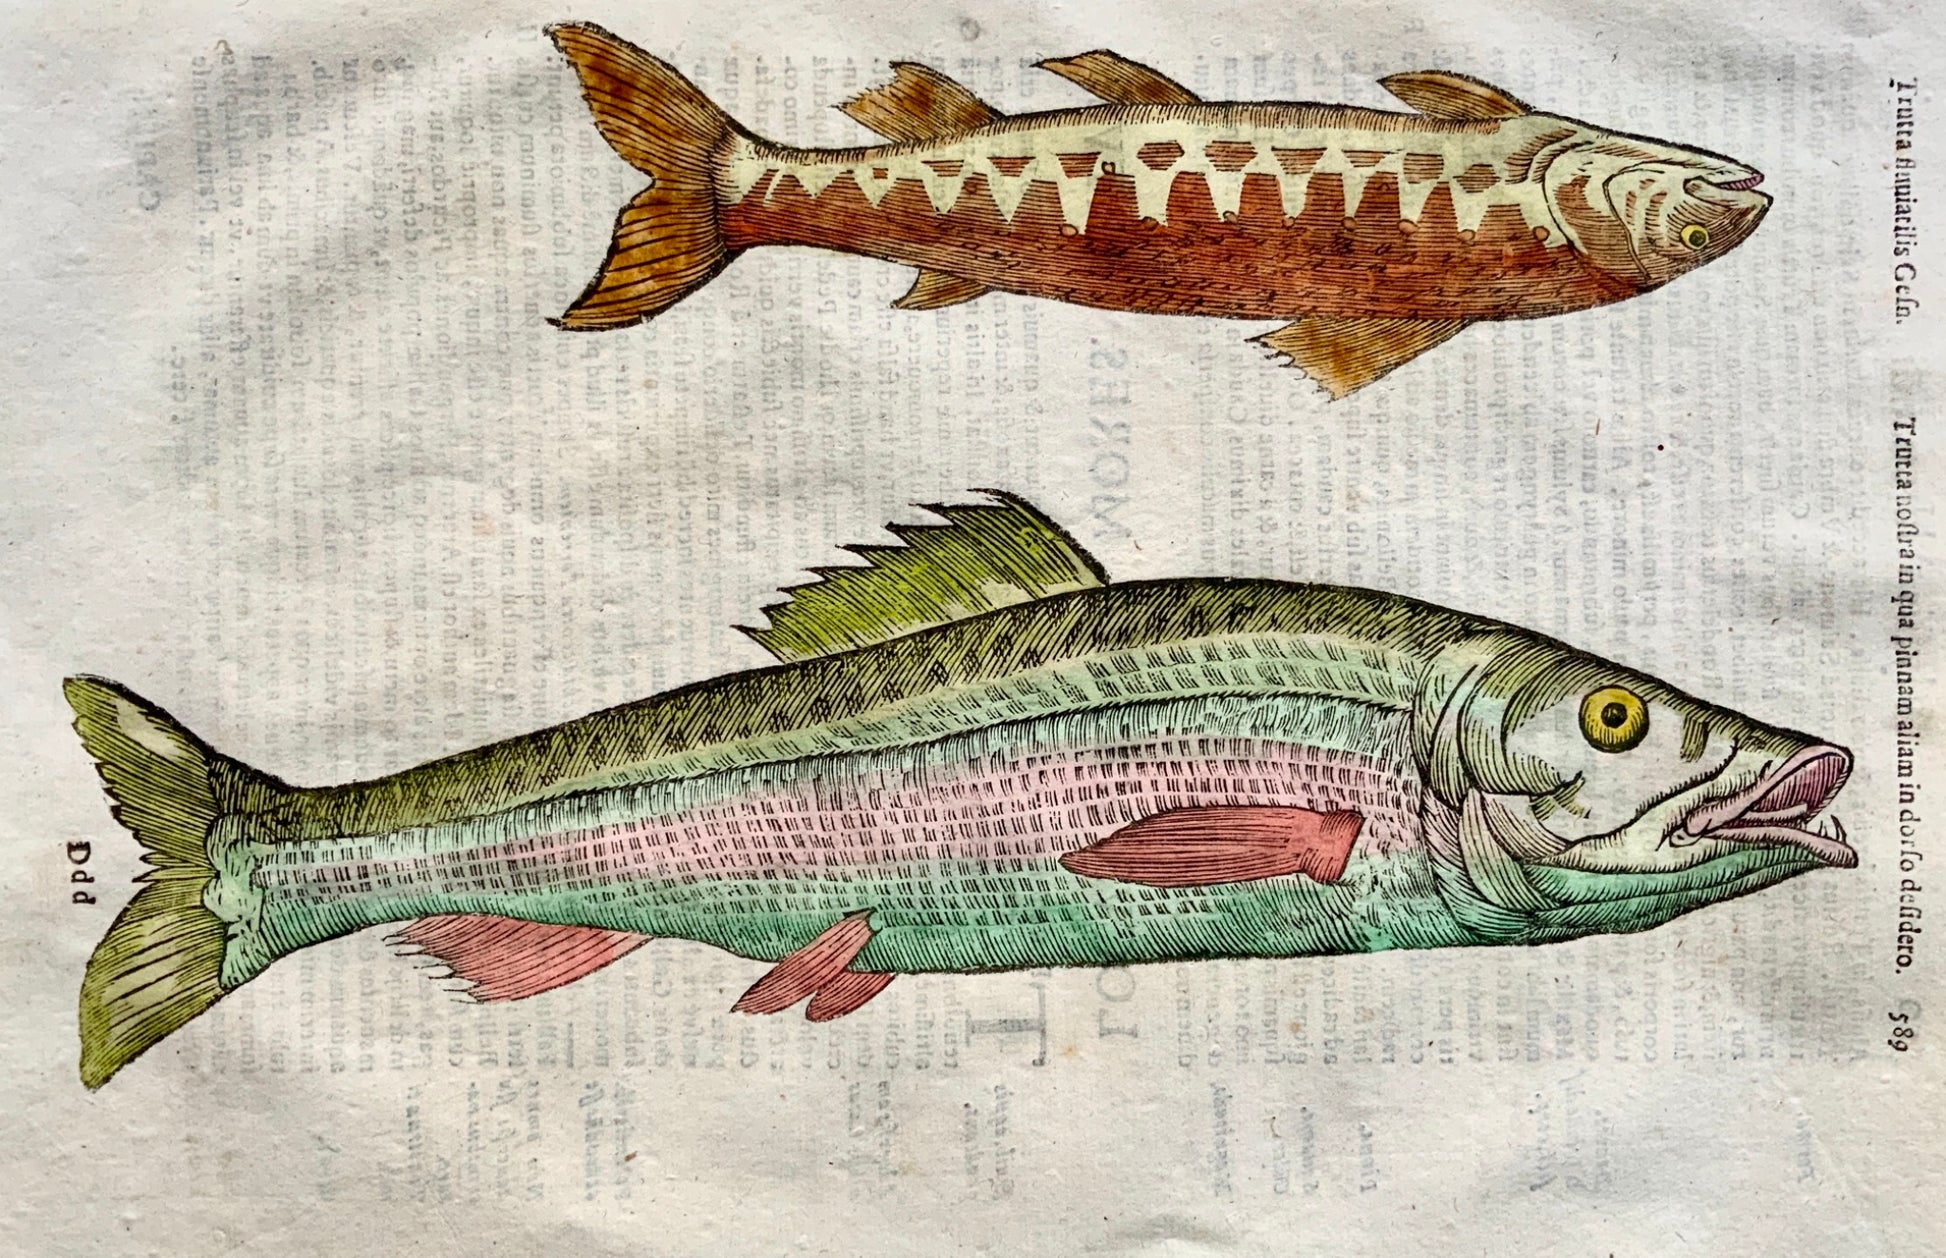 Coriolano; Aldrovandi Large folio woodcut leaf - TROUT Fish Hand coloured - 1638